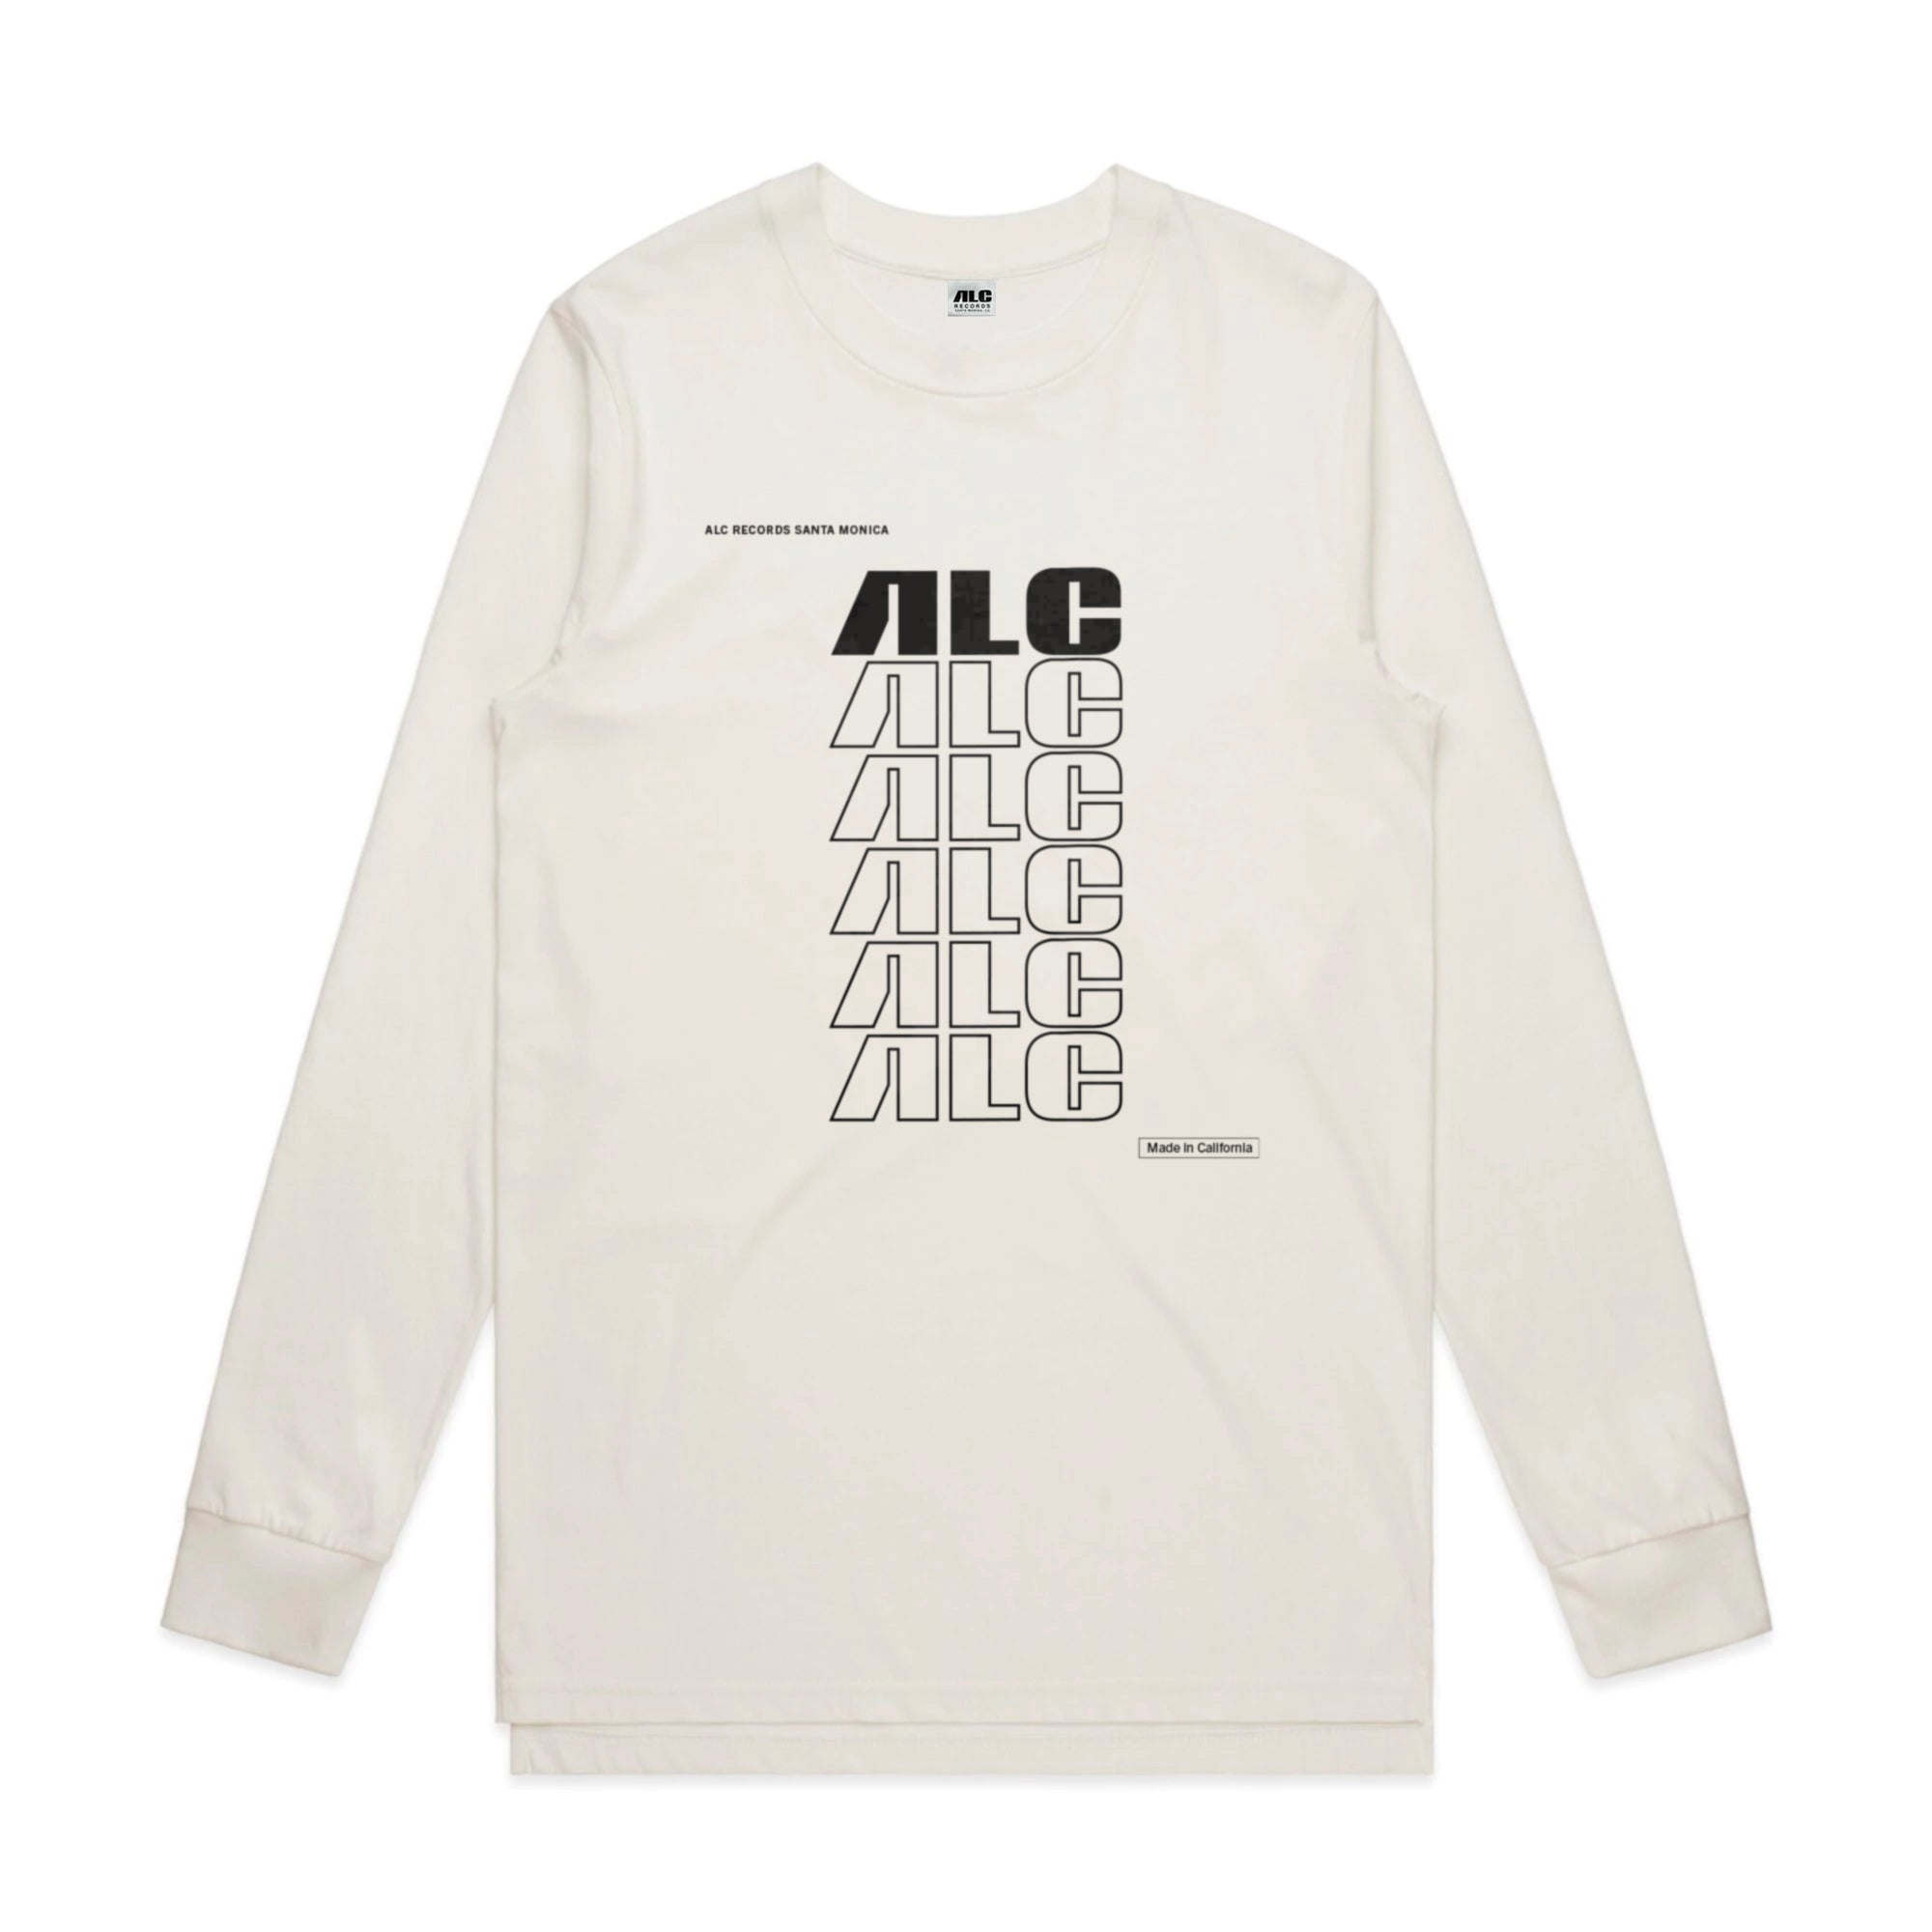 ALC Records "Made In California" (Longsleeve Natural Shirt)